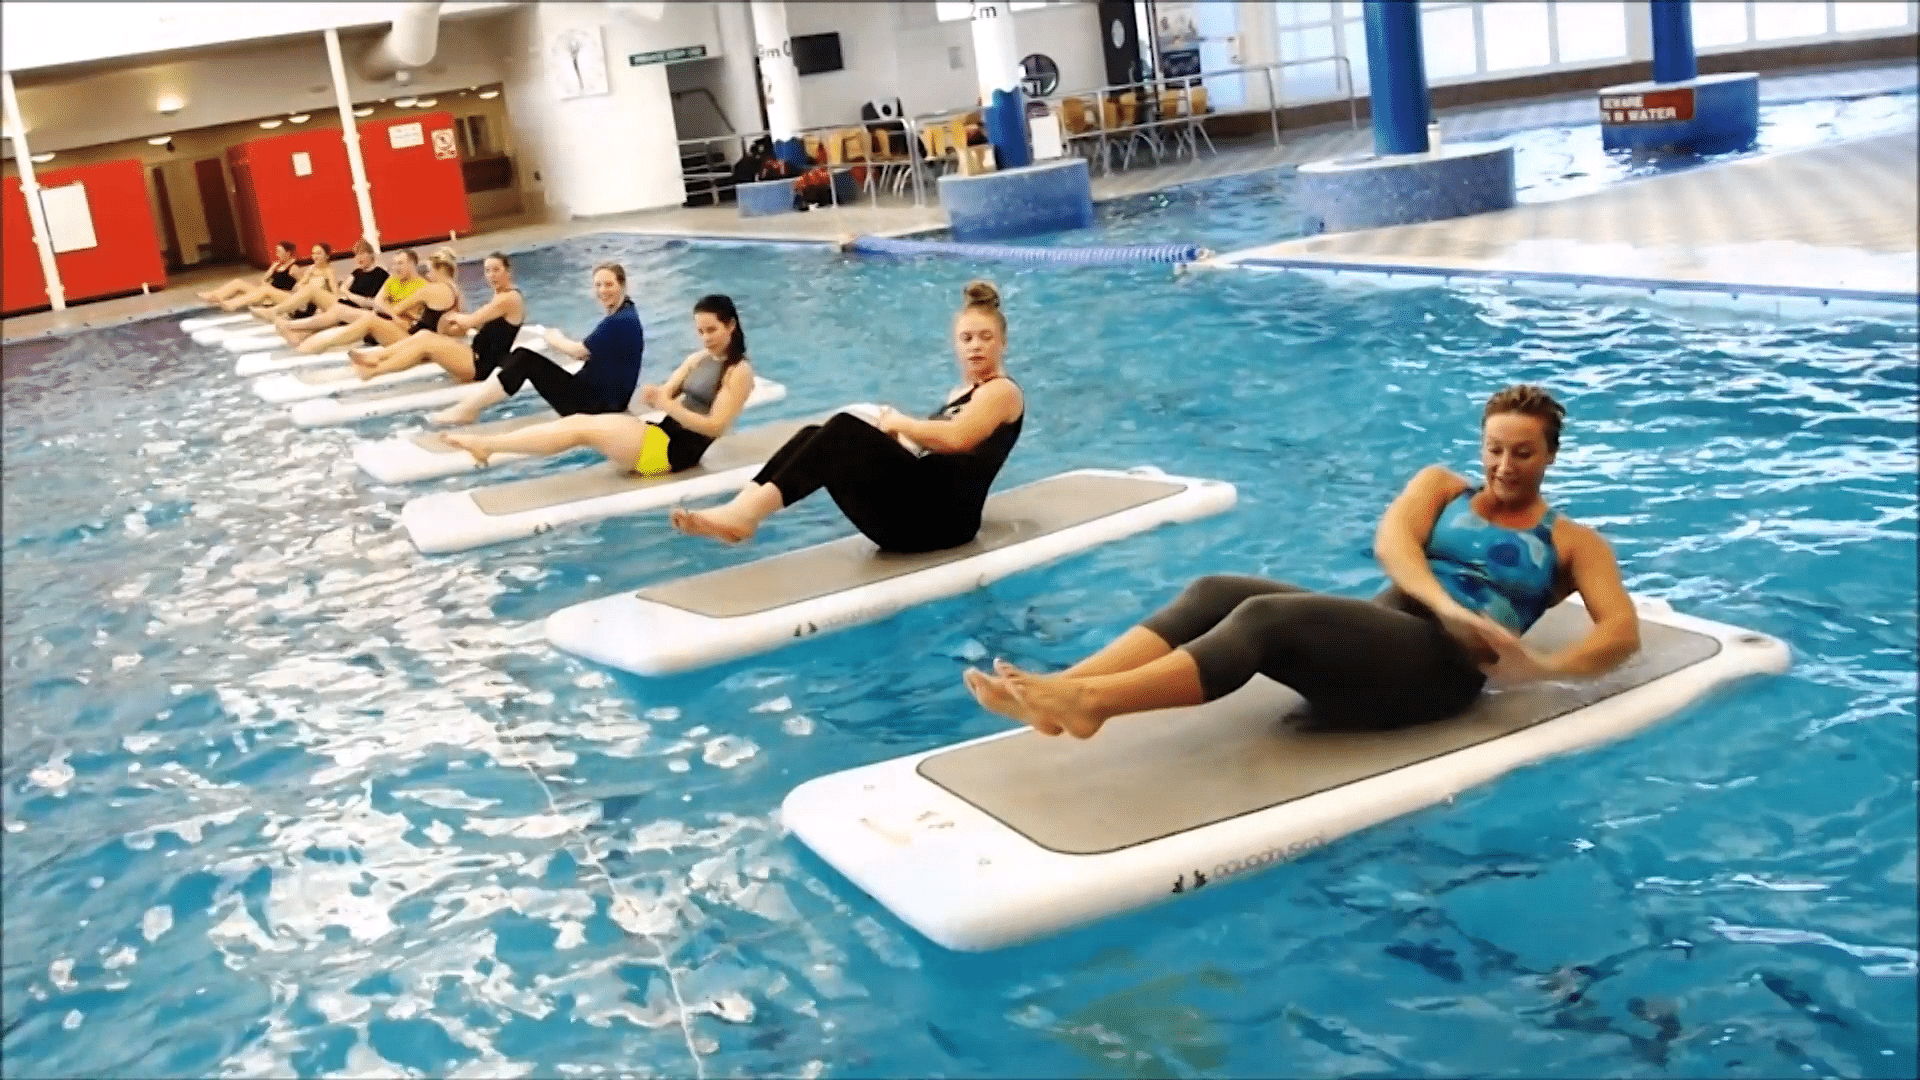 Float Fit Aerobics involves performing aerobics while balancing on floats